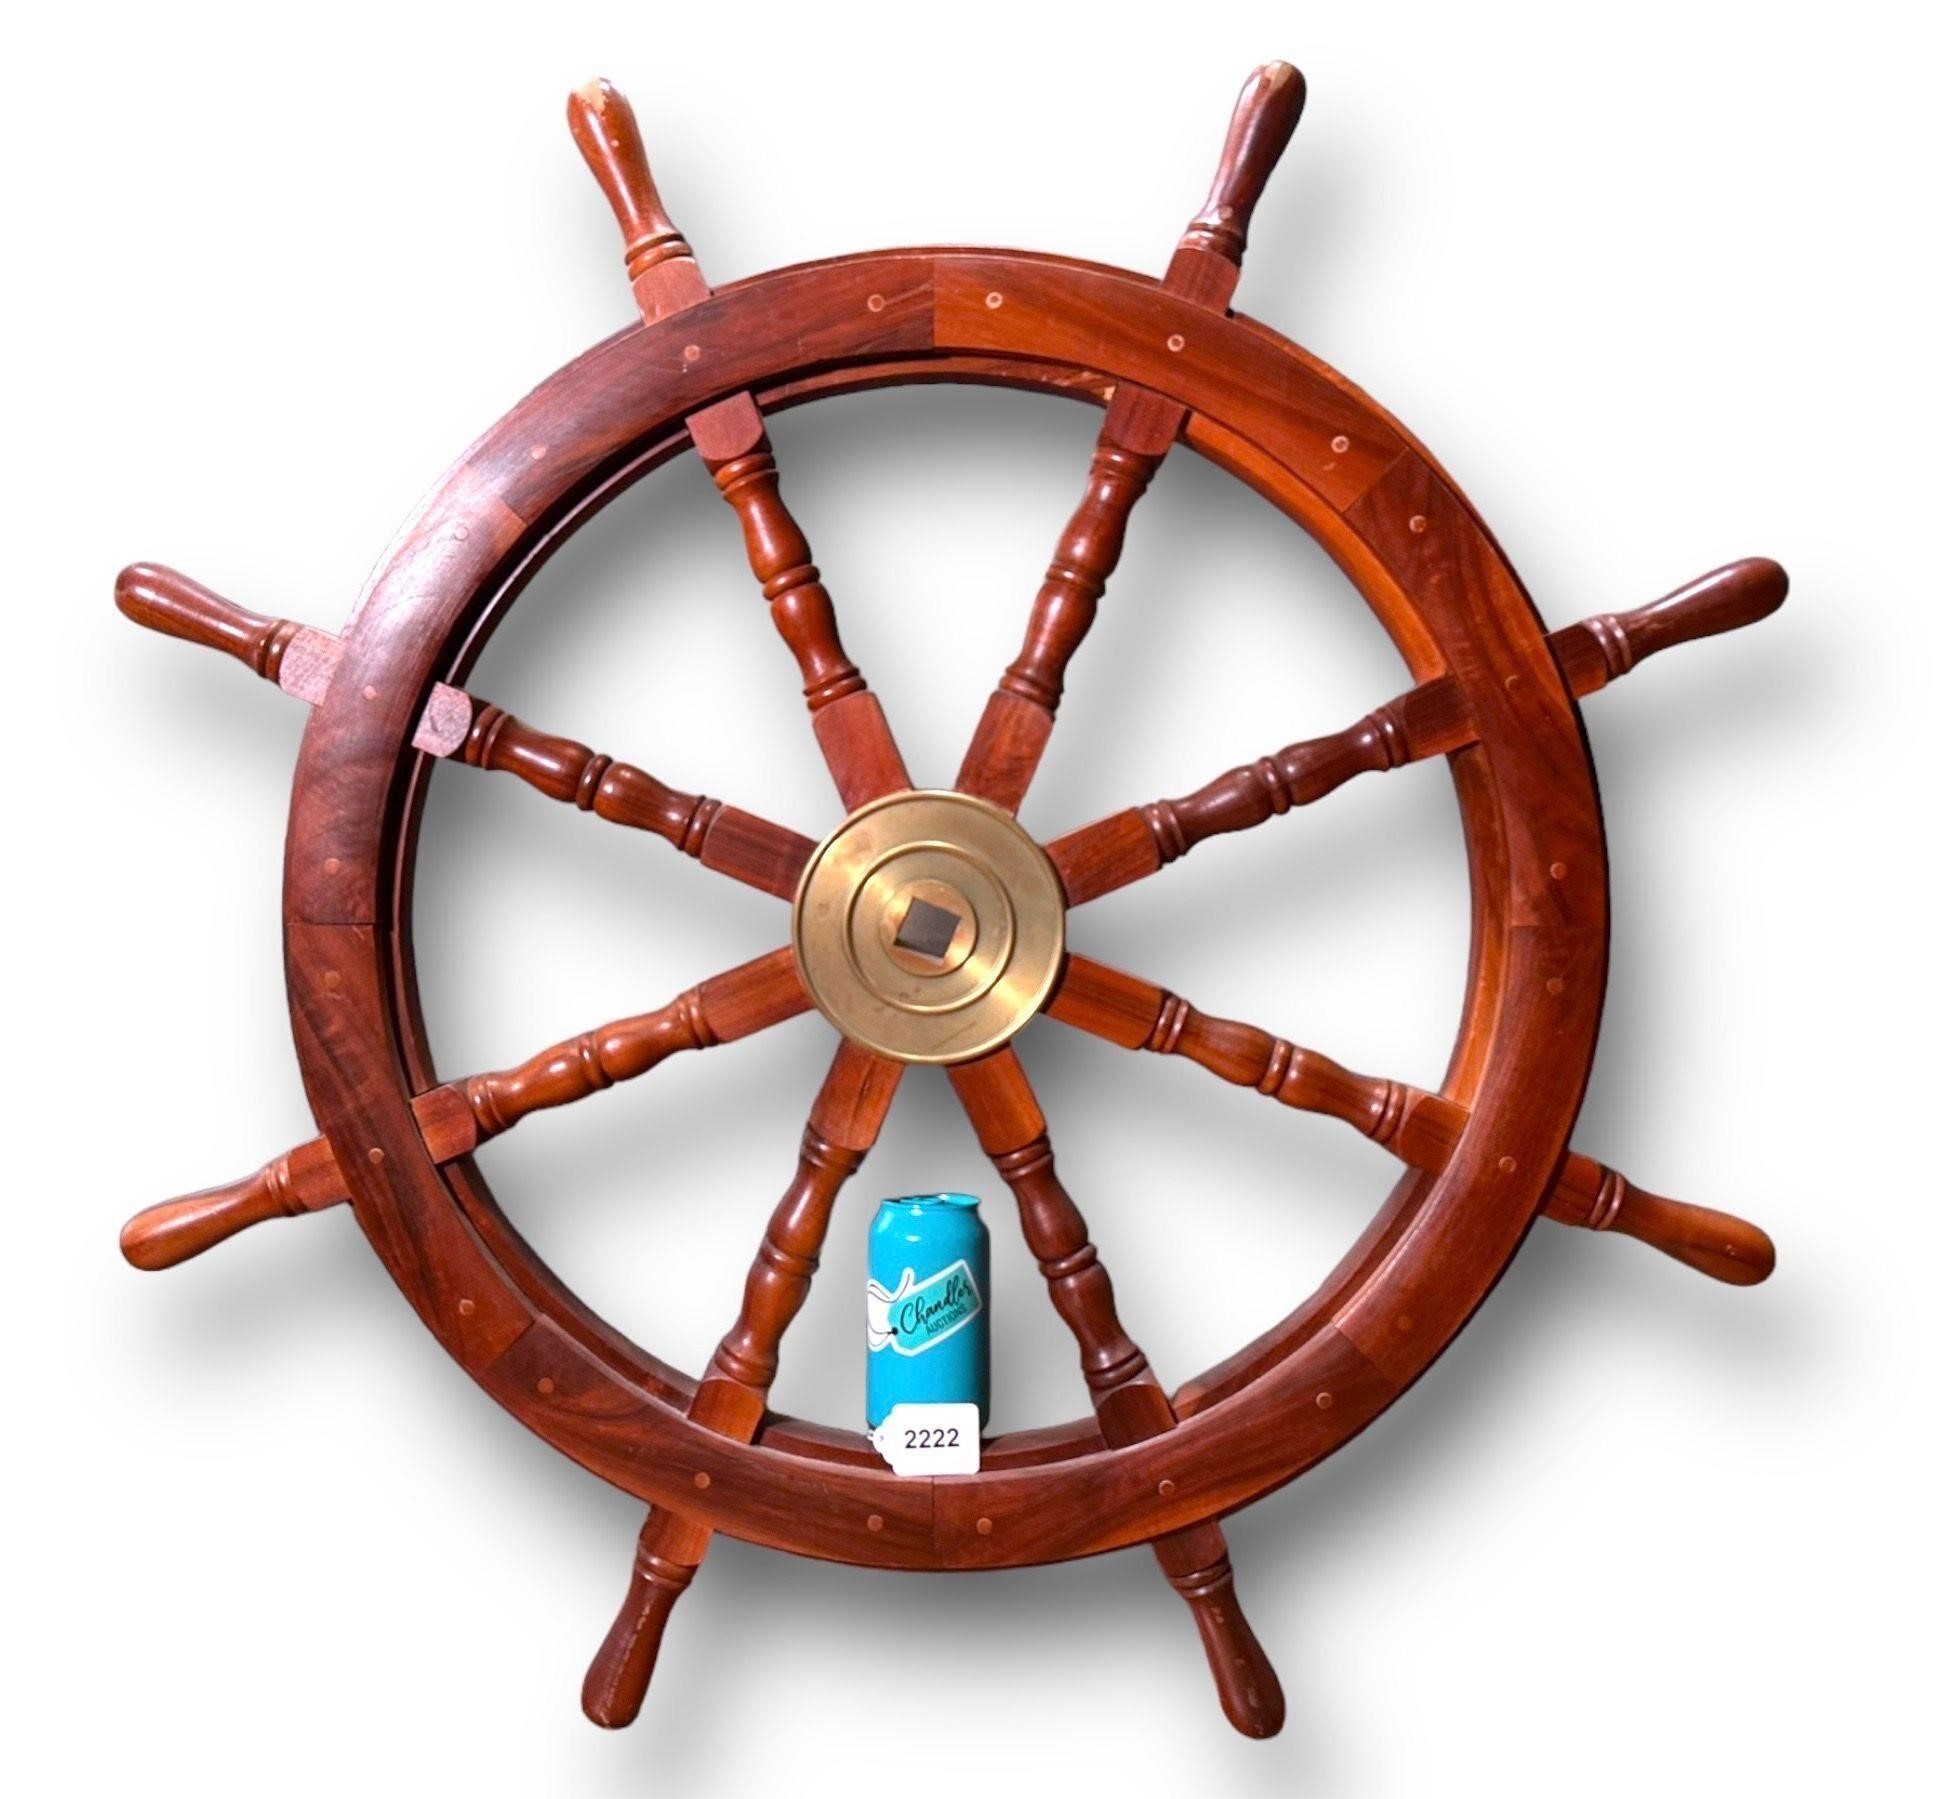 Atq. Ships Wheel